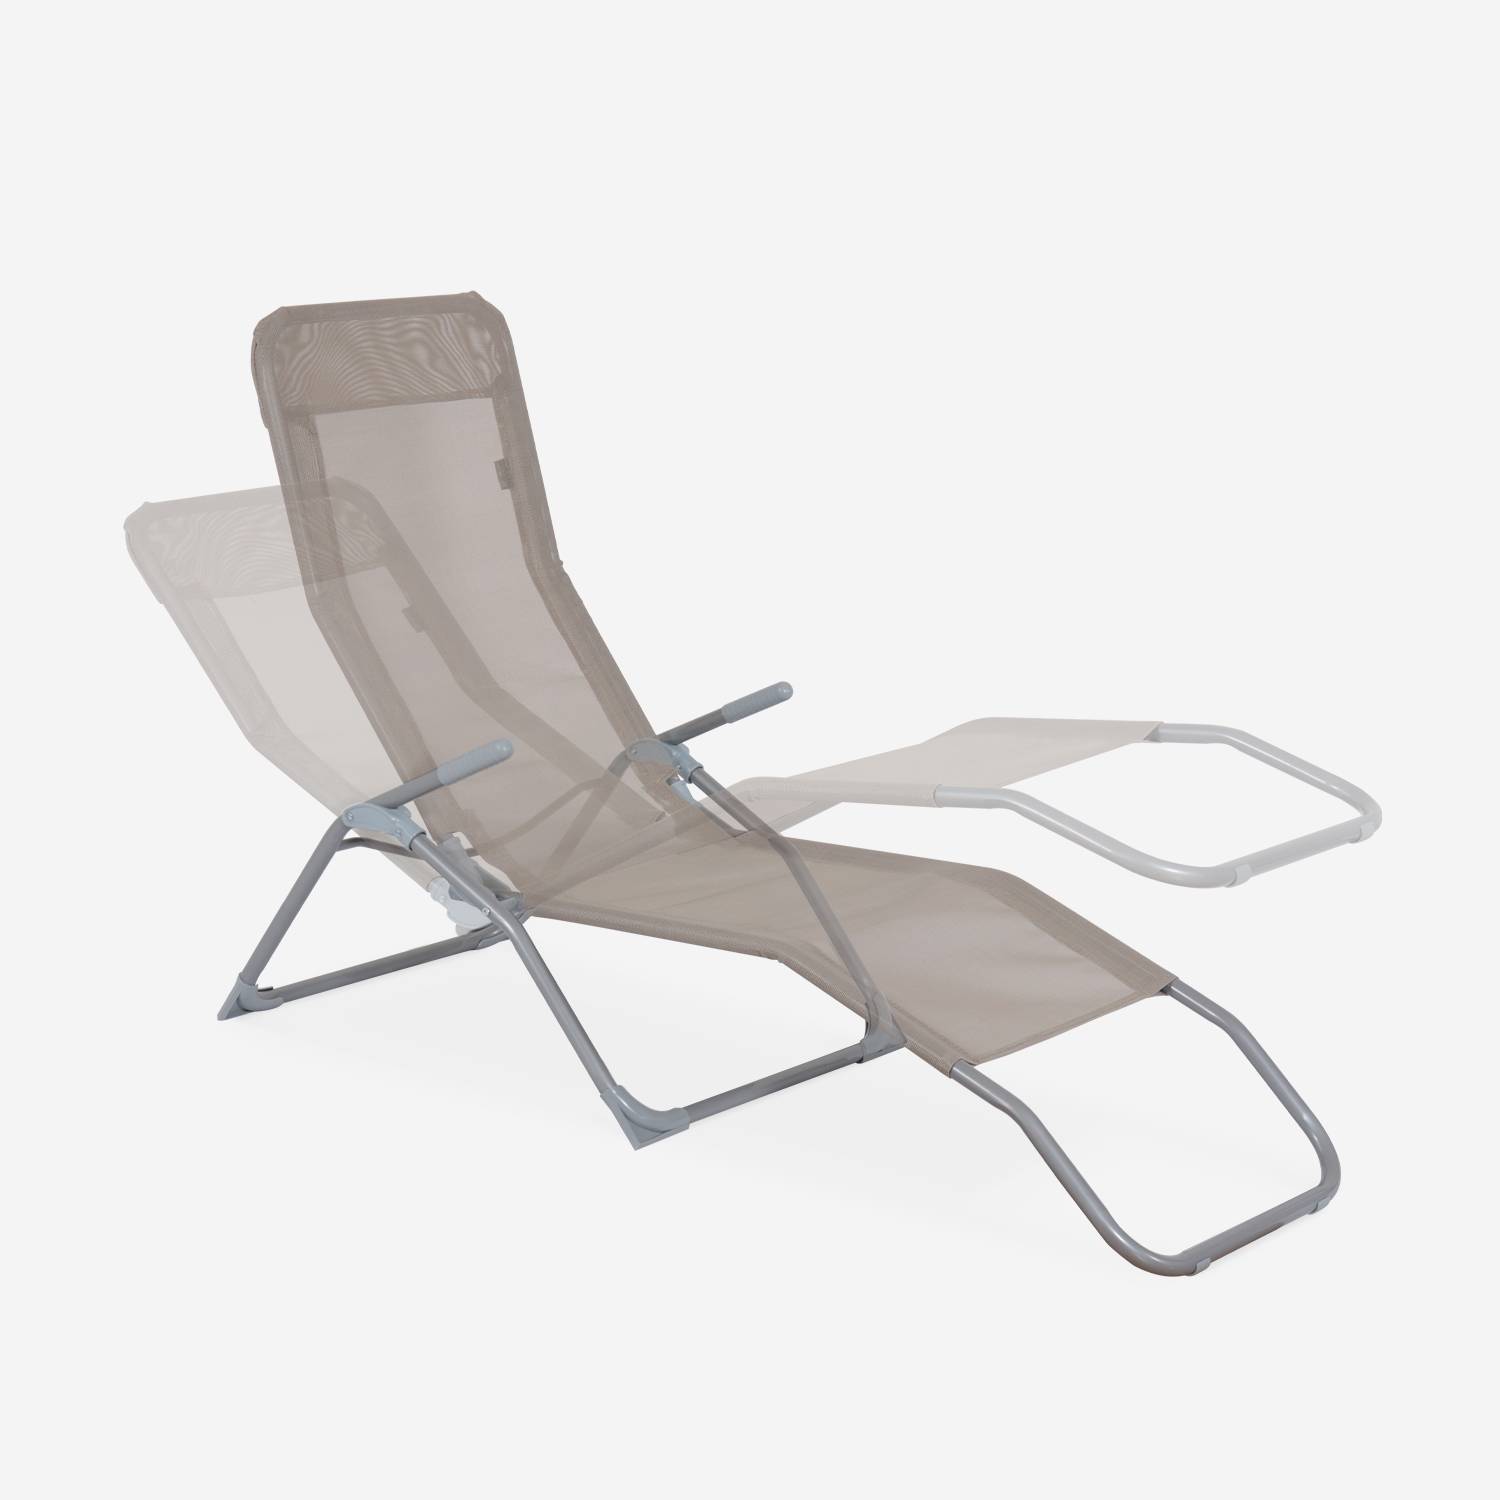 Set van 4 opvouwbare ligstoelen - Levito Taupe - Ligstoelen van textileen, 2 posities, opvouwbare ligstoelen,sweeek,Photo5